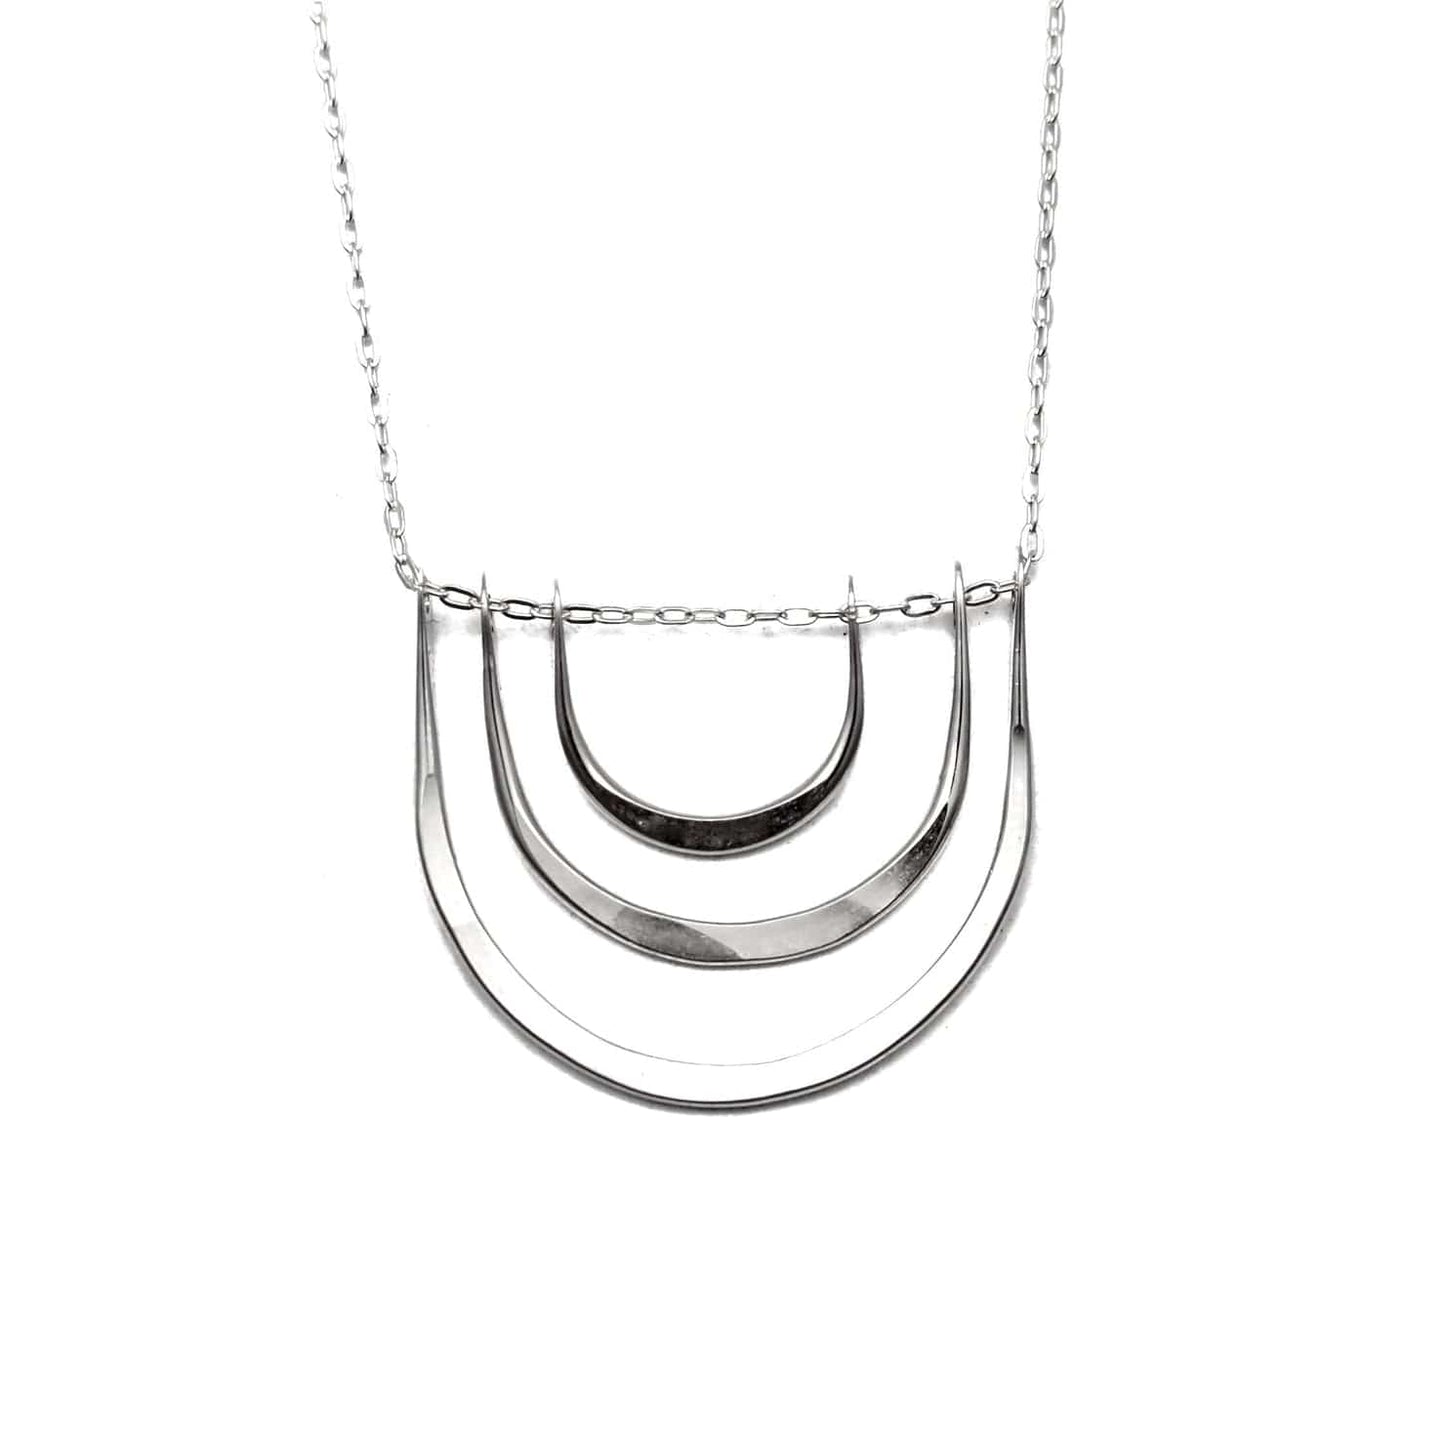 NKL Triple Arc Necklace Silver